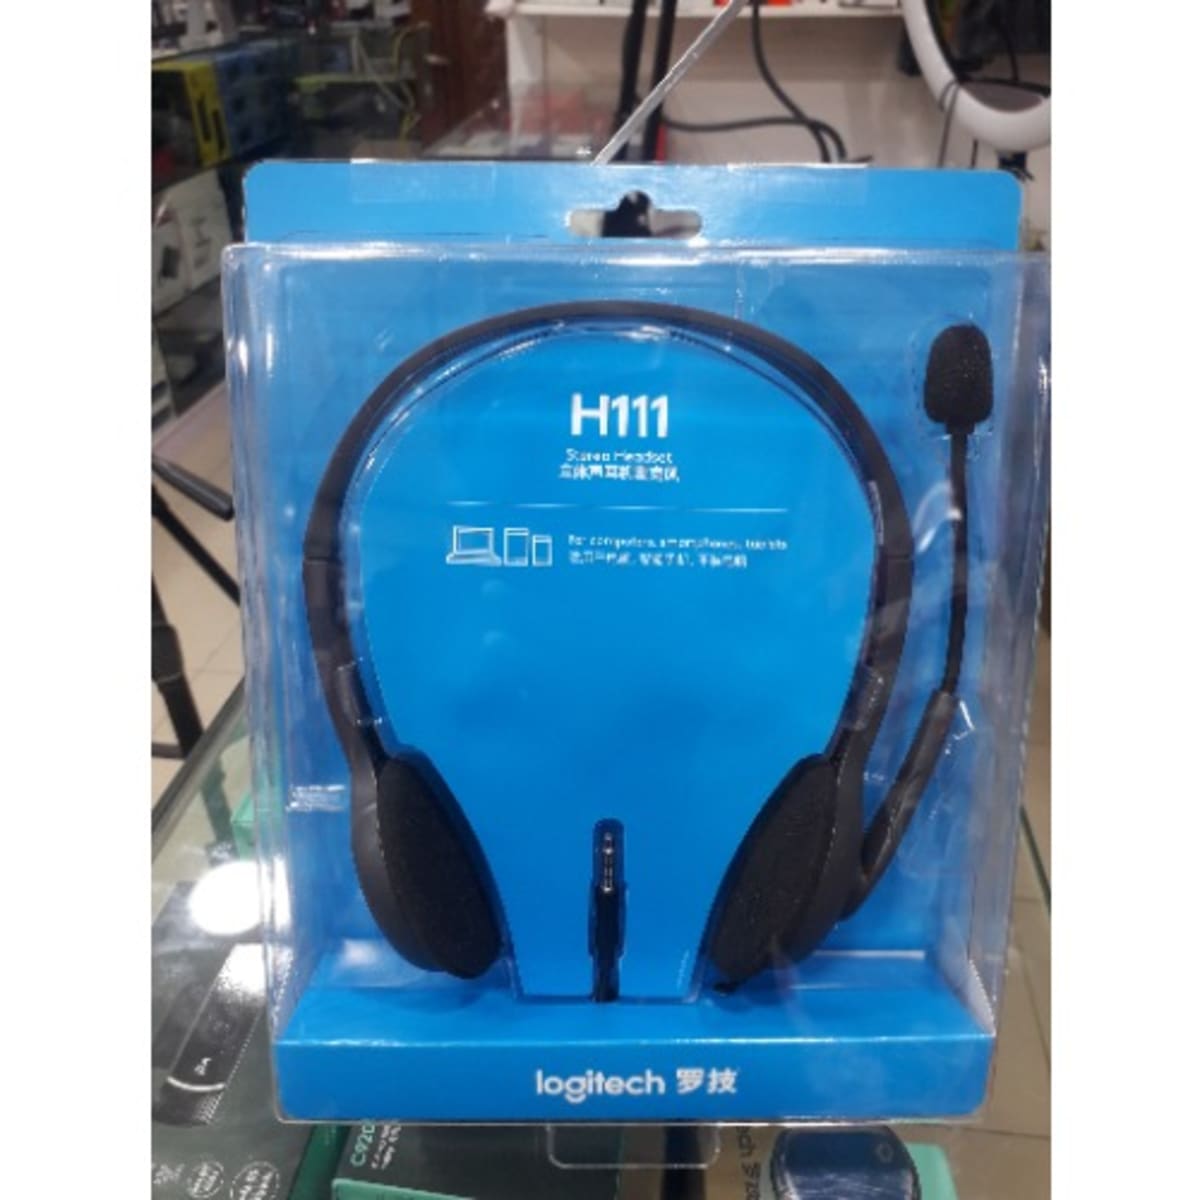 Stereo Wired Konga Shopping H111 Headset Online Logitech |